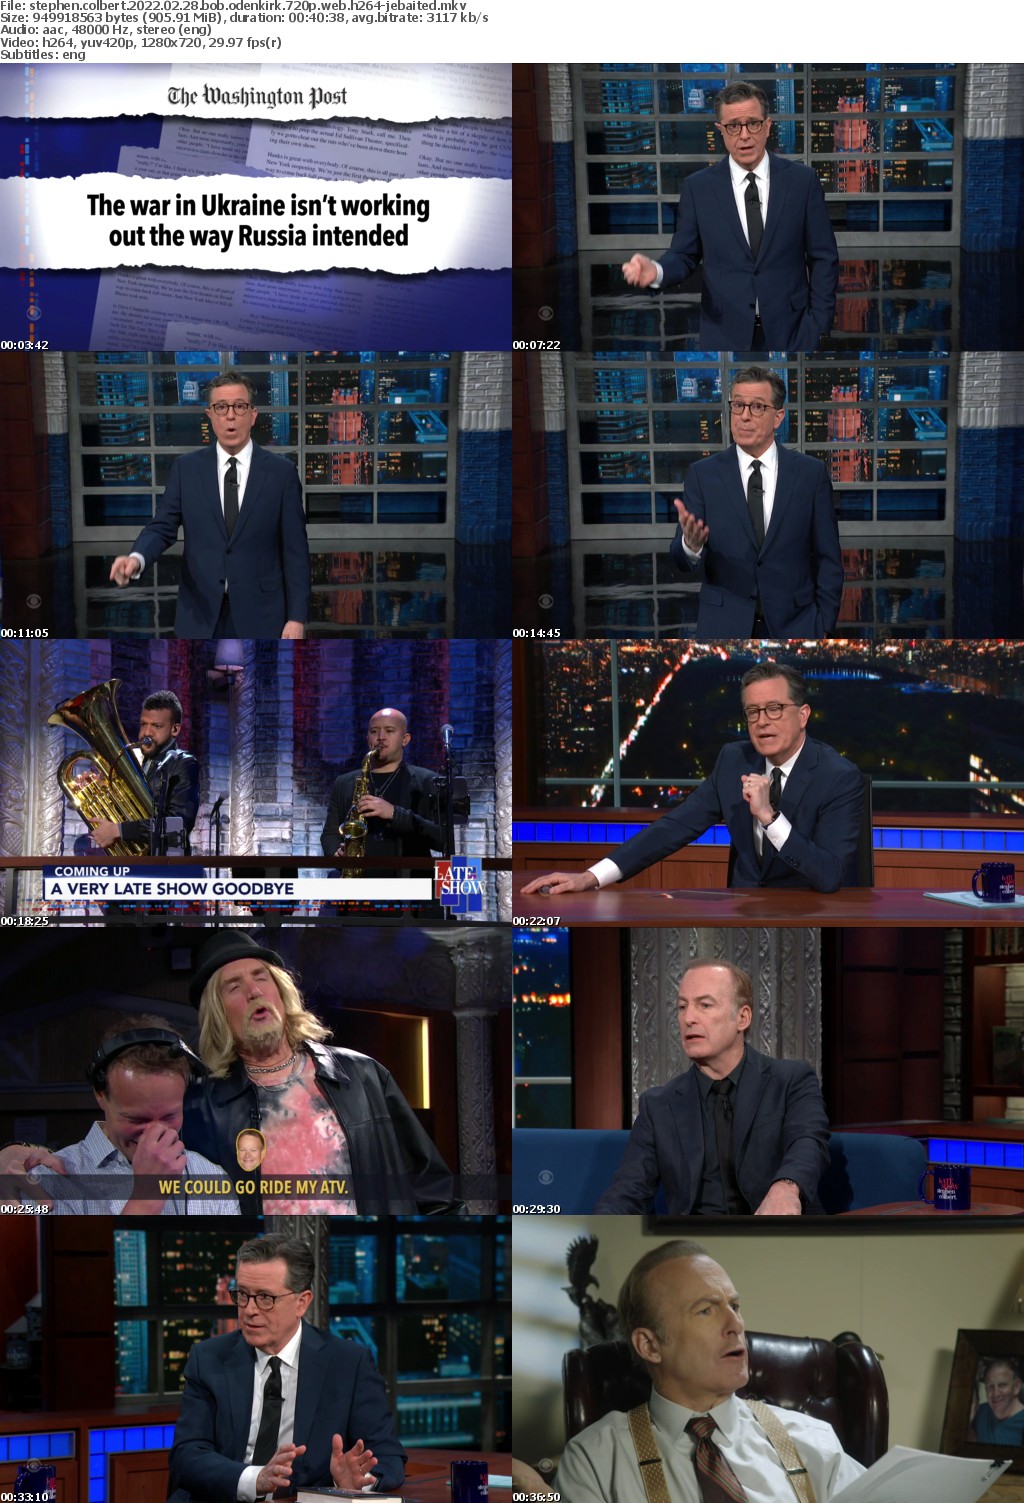 Stephen Colbert 2022 02 28 Bob Odenkirk 720p WEB H264-JEBAITED